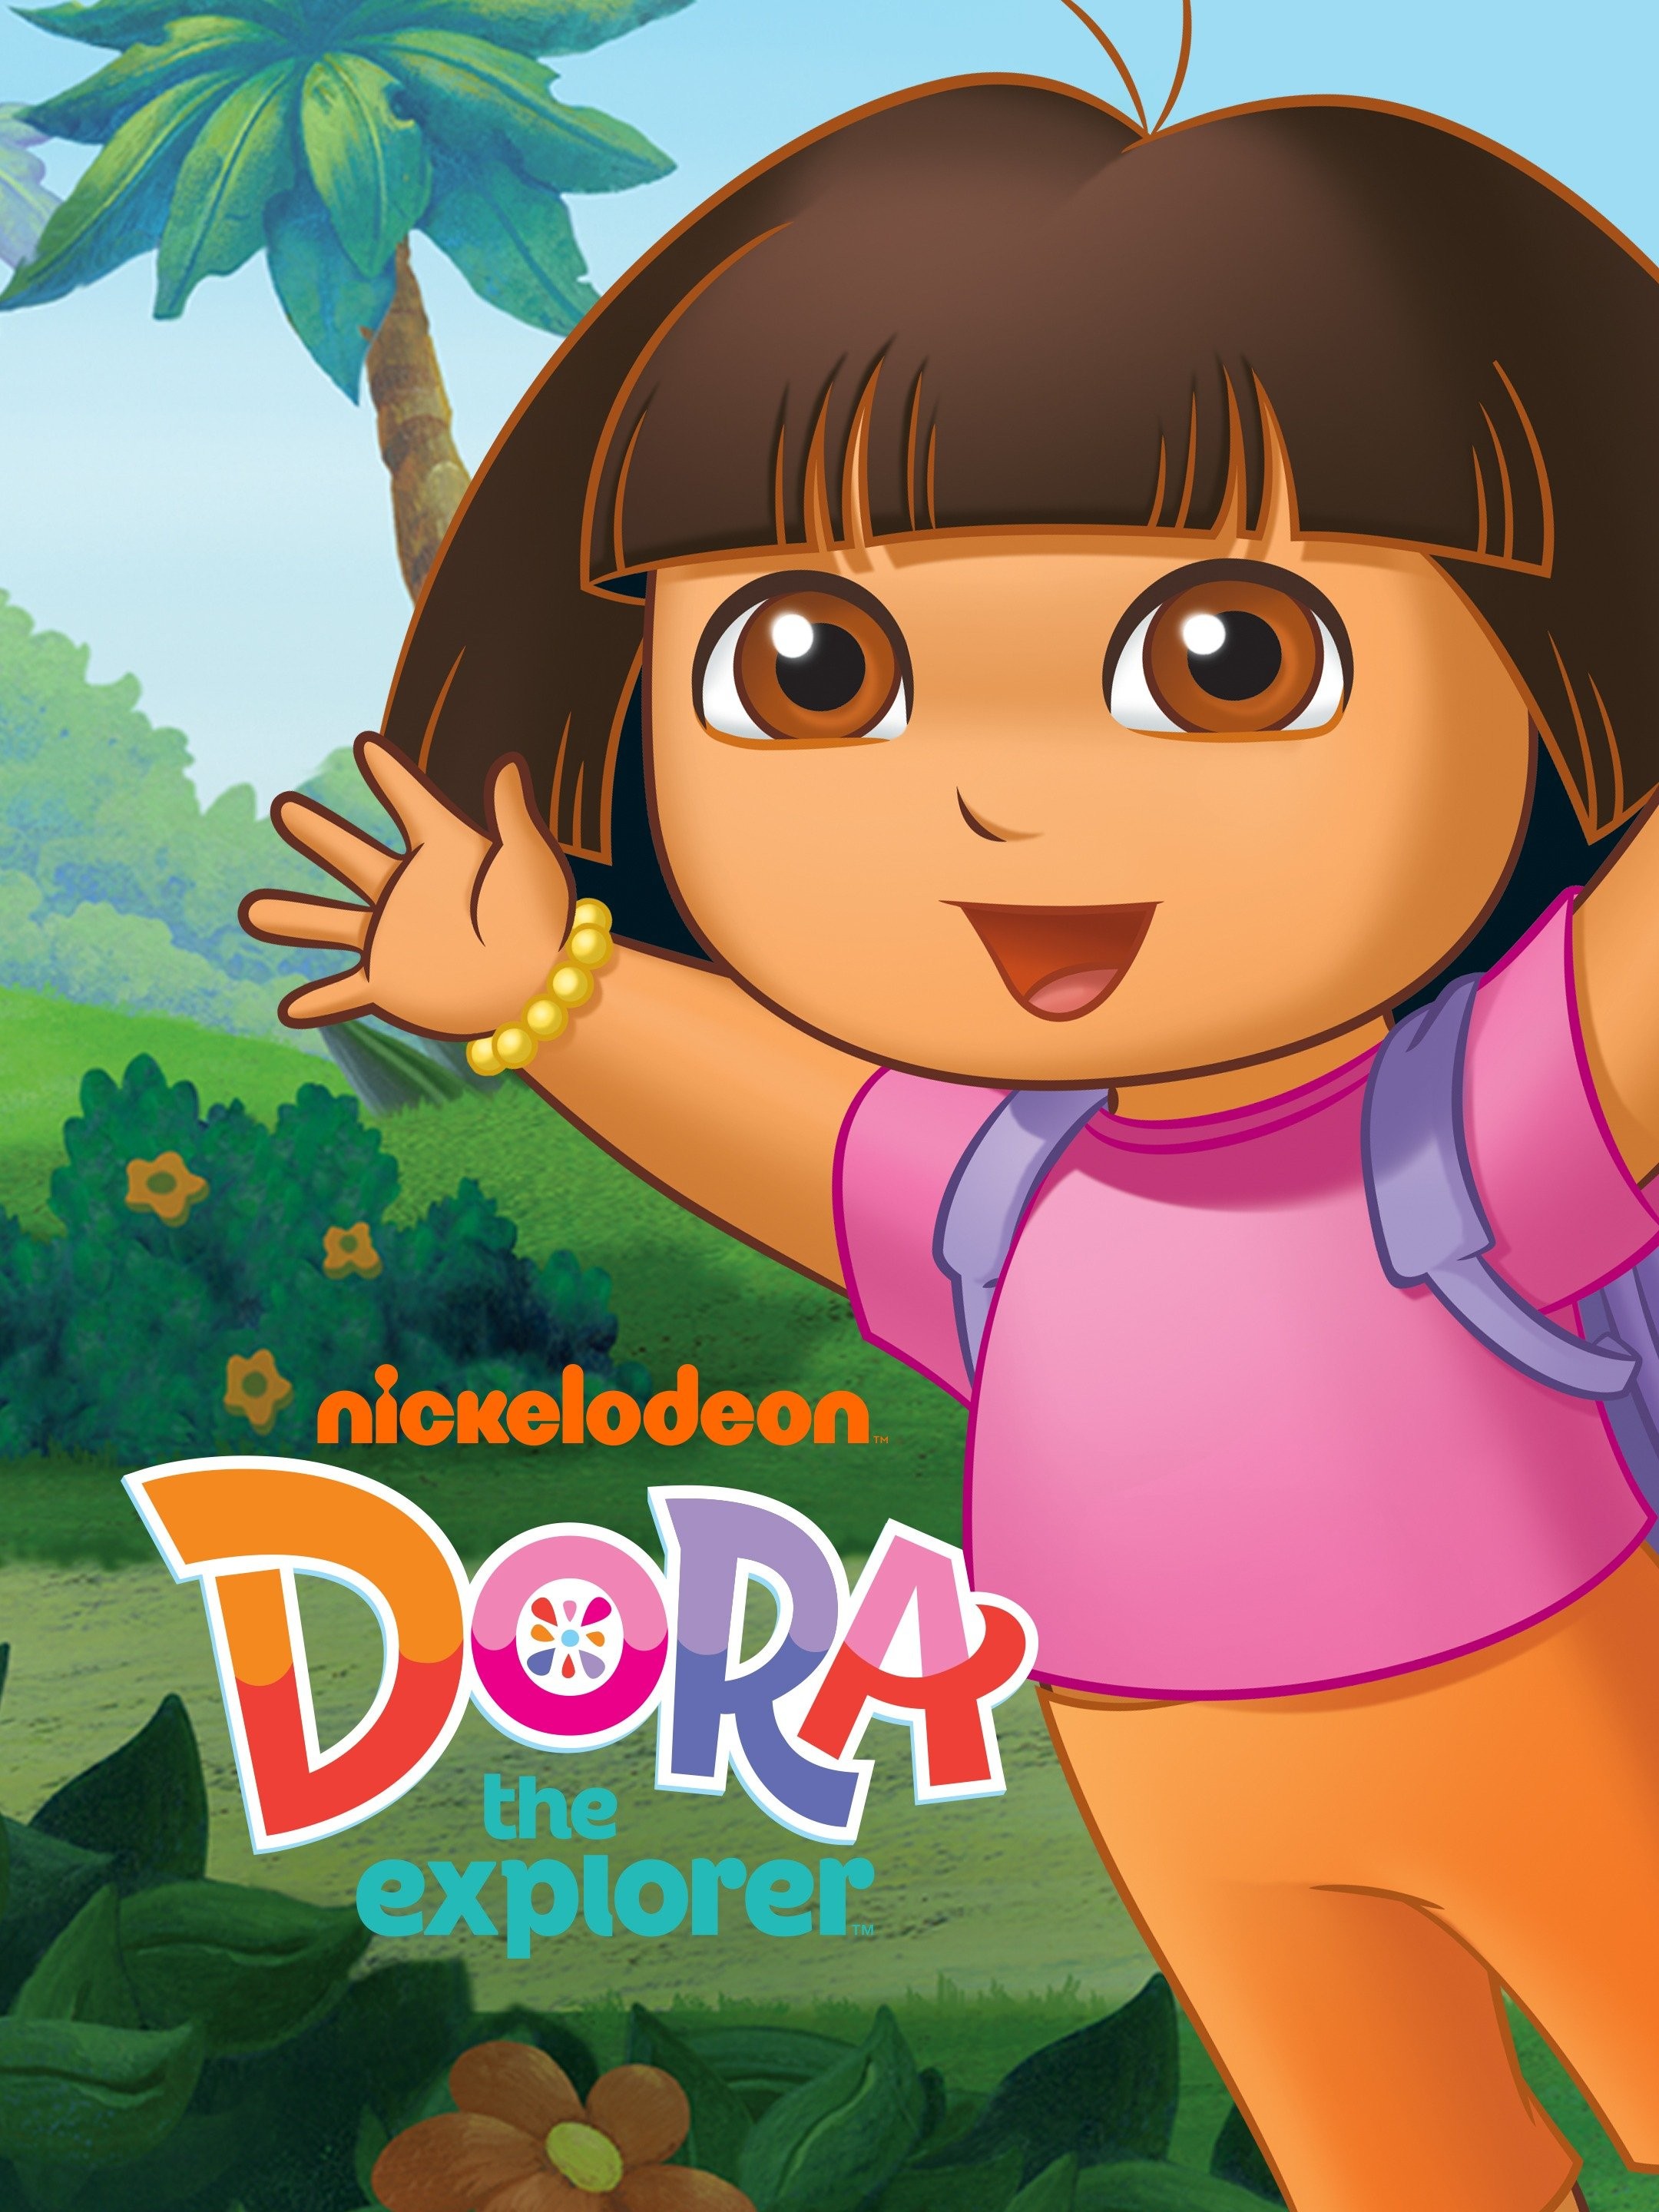 Dora The Explorer's Lasting Impact